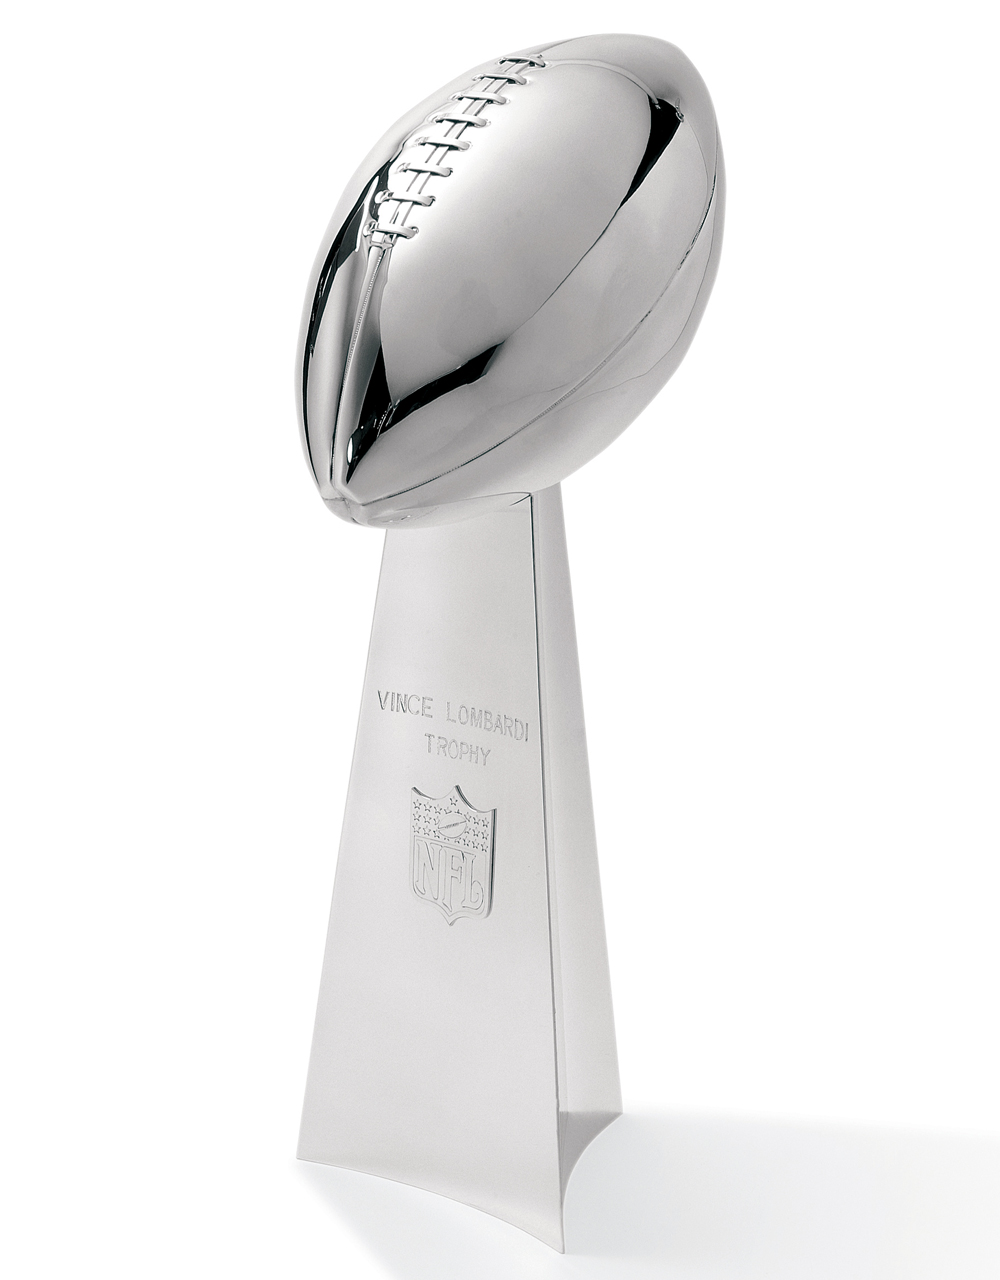 The Vince Lombardi Super Bowl Trophy